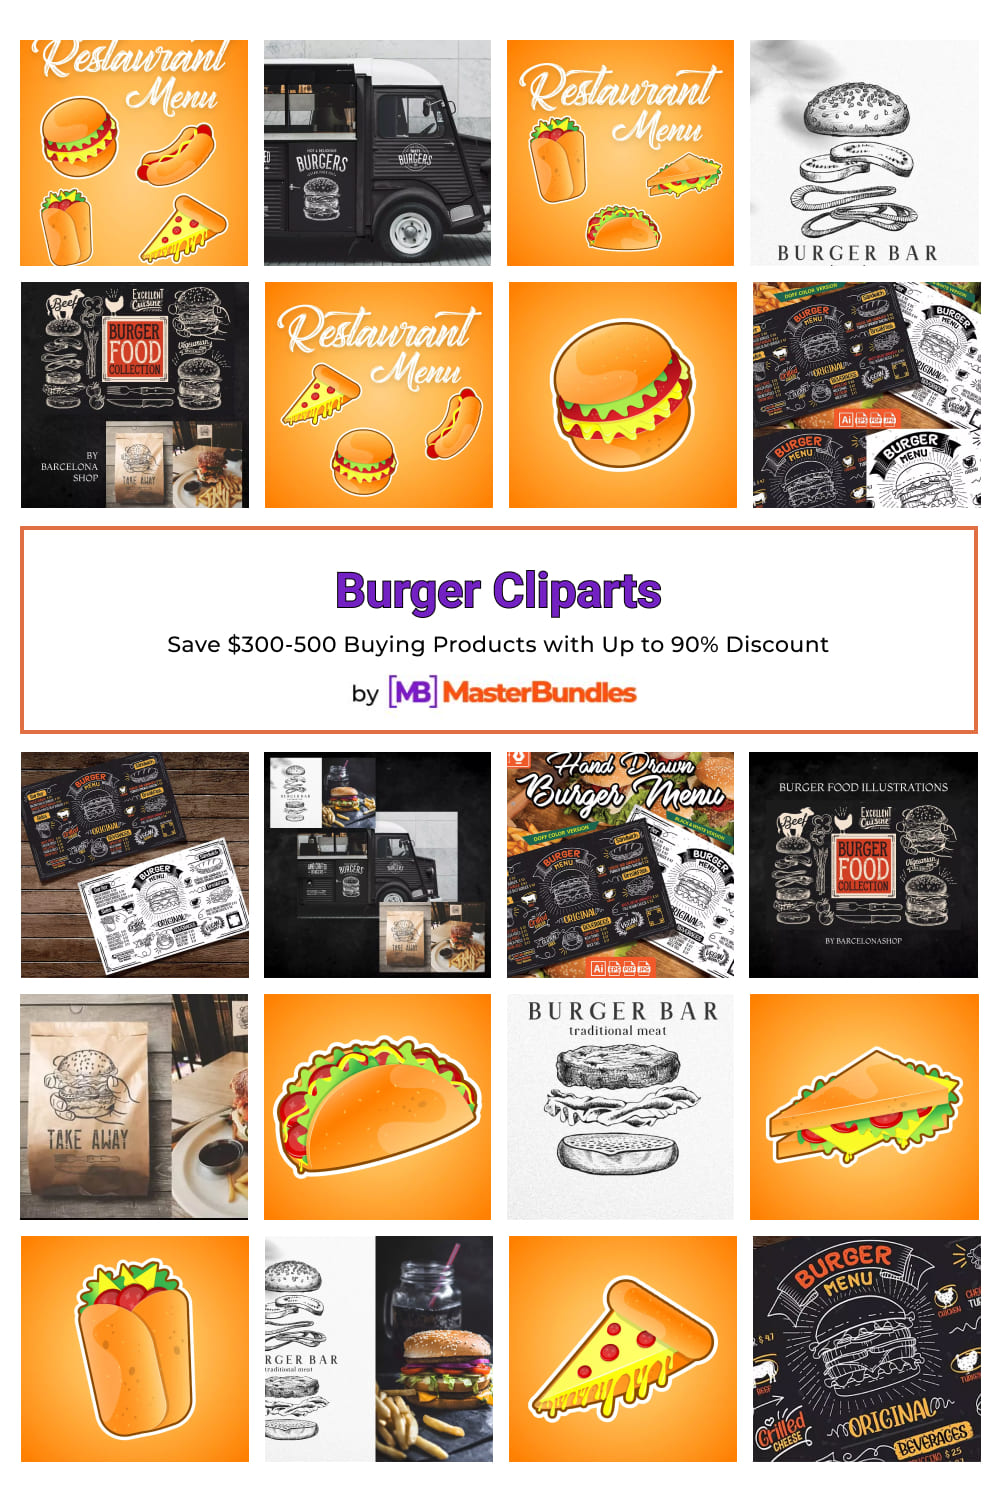 Burger Cliparts for Pinterest.